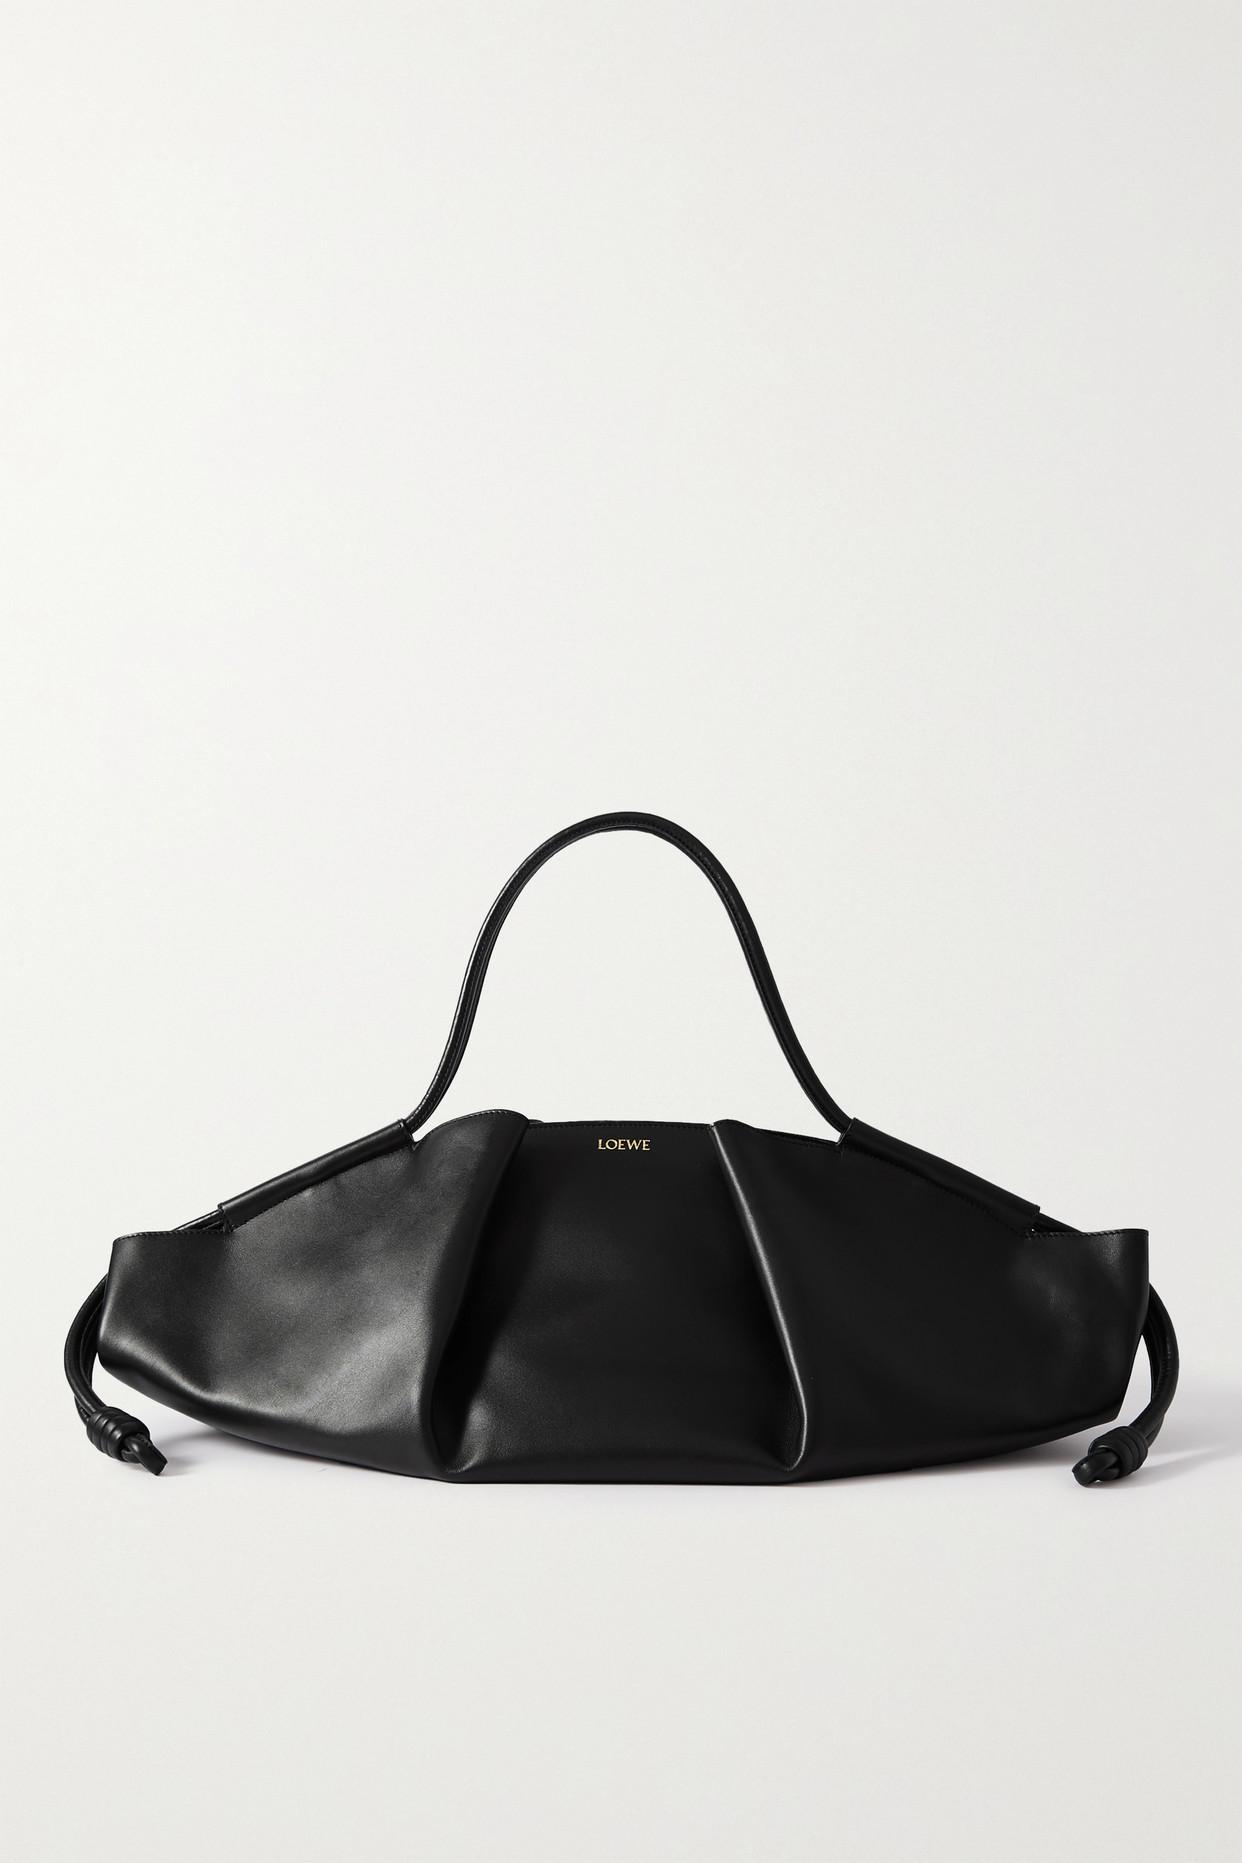 Loewe Paseo Pleated Leather Shoulder Bag in Black | Lyst